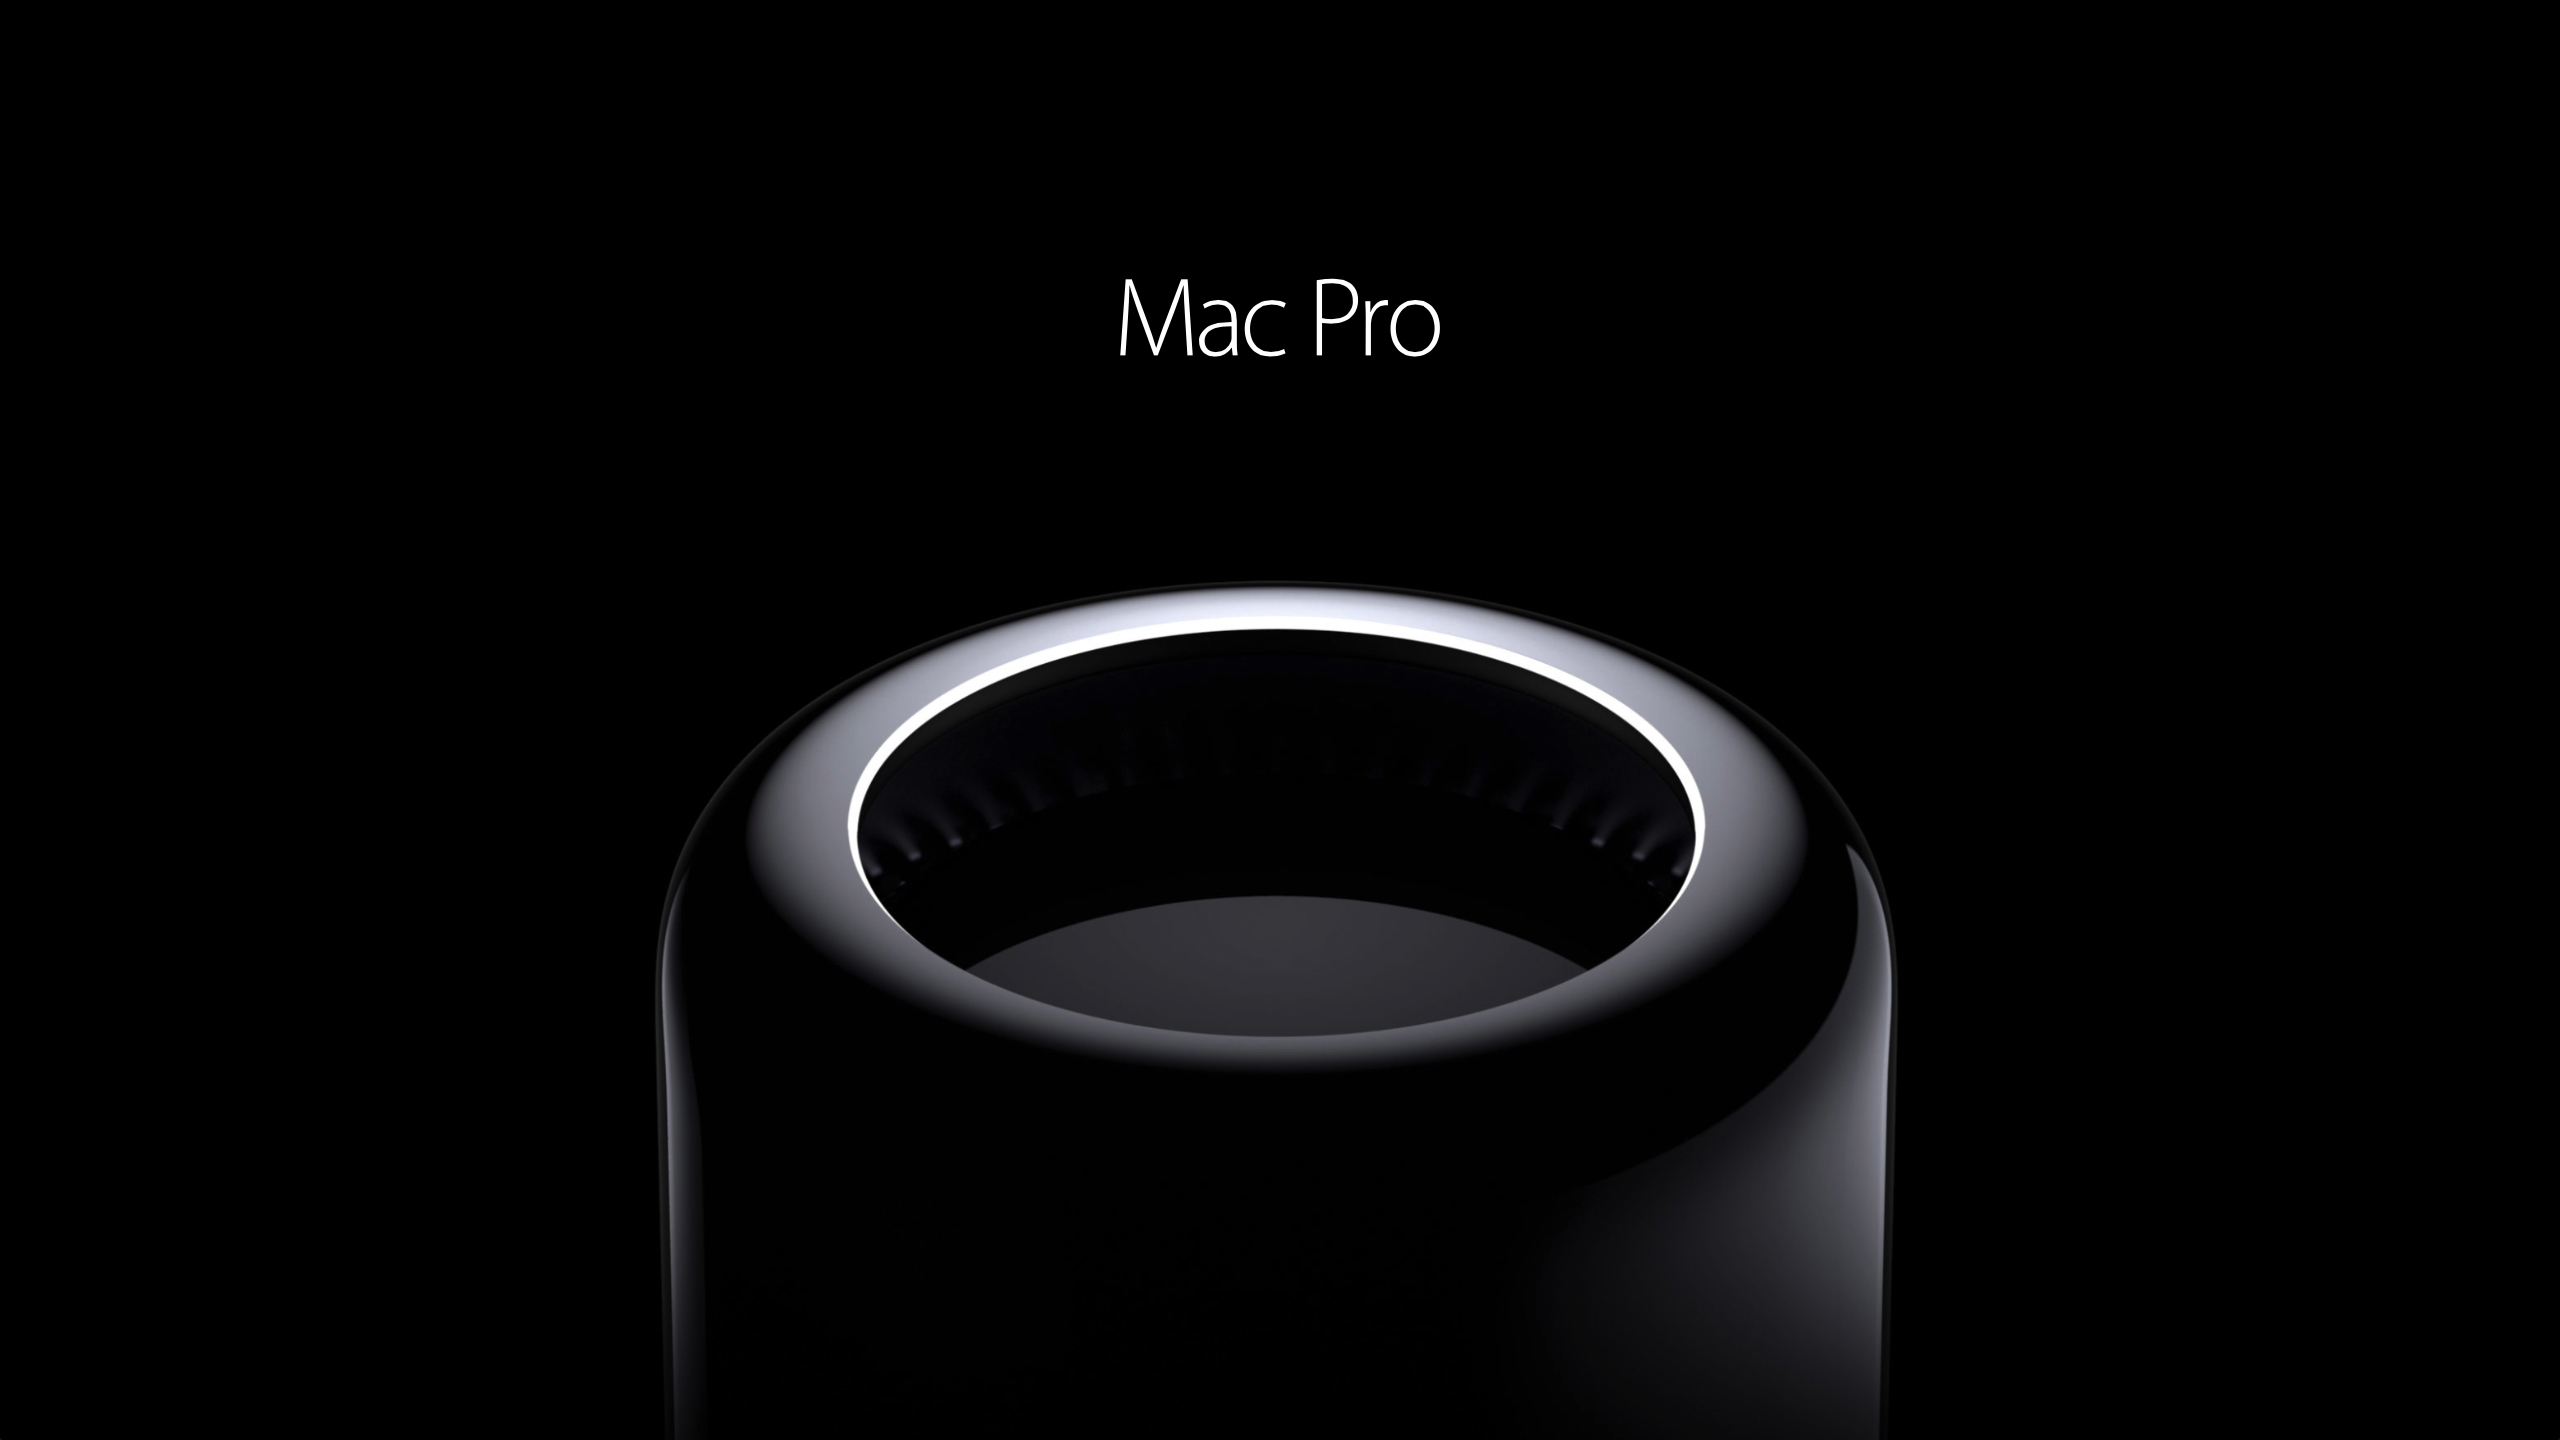 Apple wallpaper Mac Pro 2014 gloss black black background a new